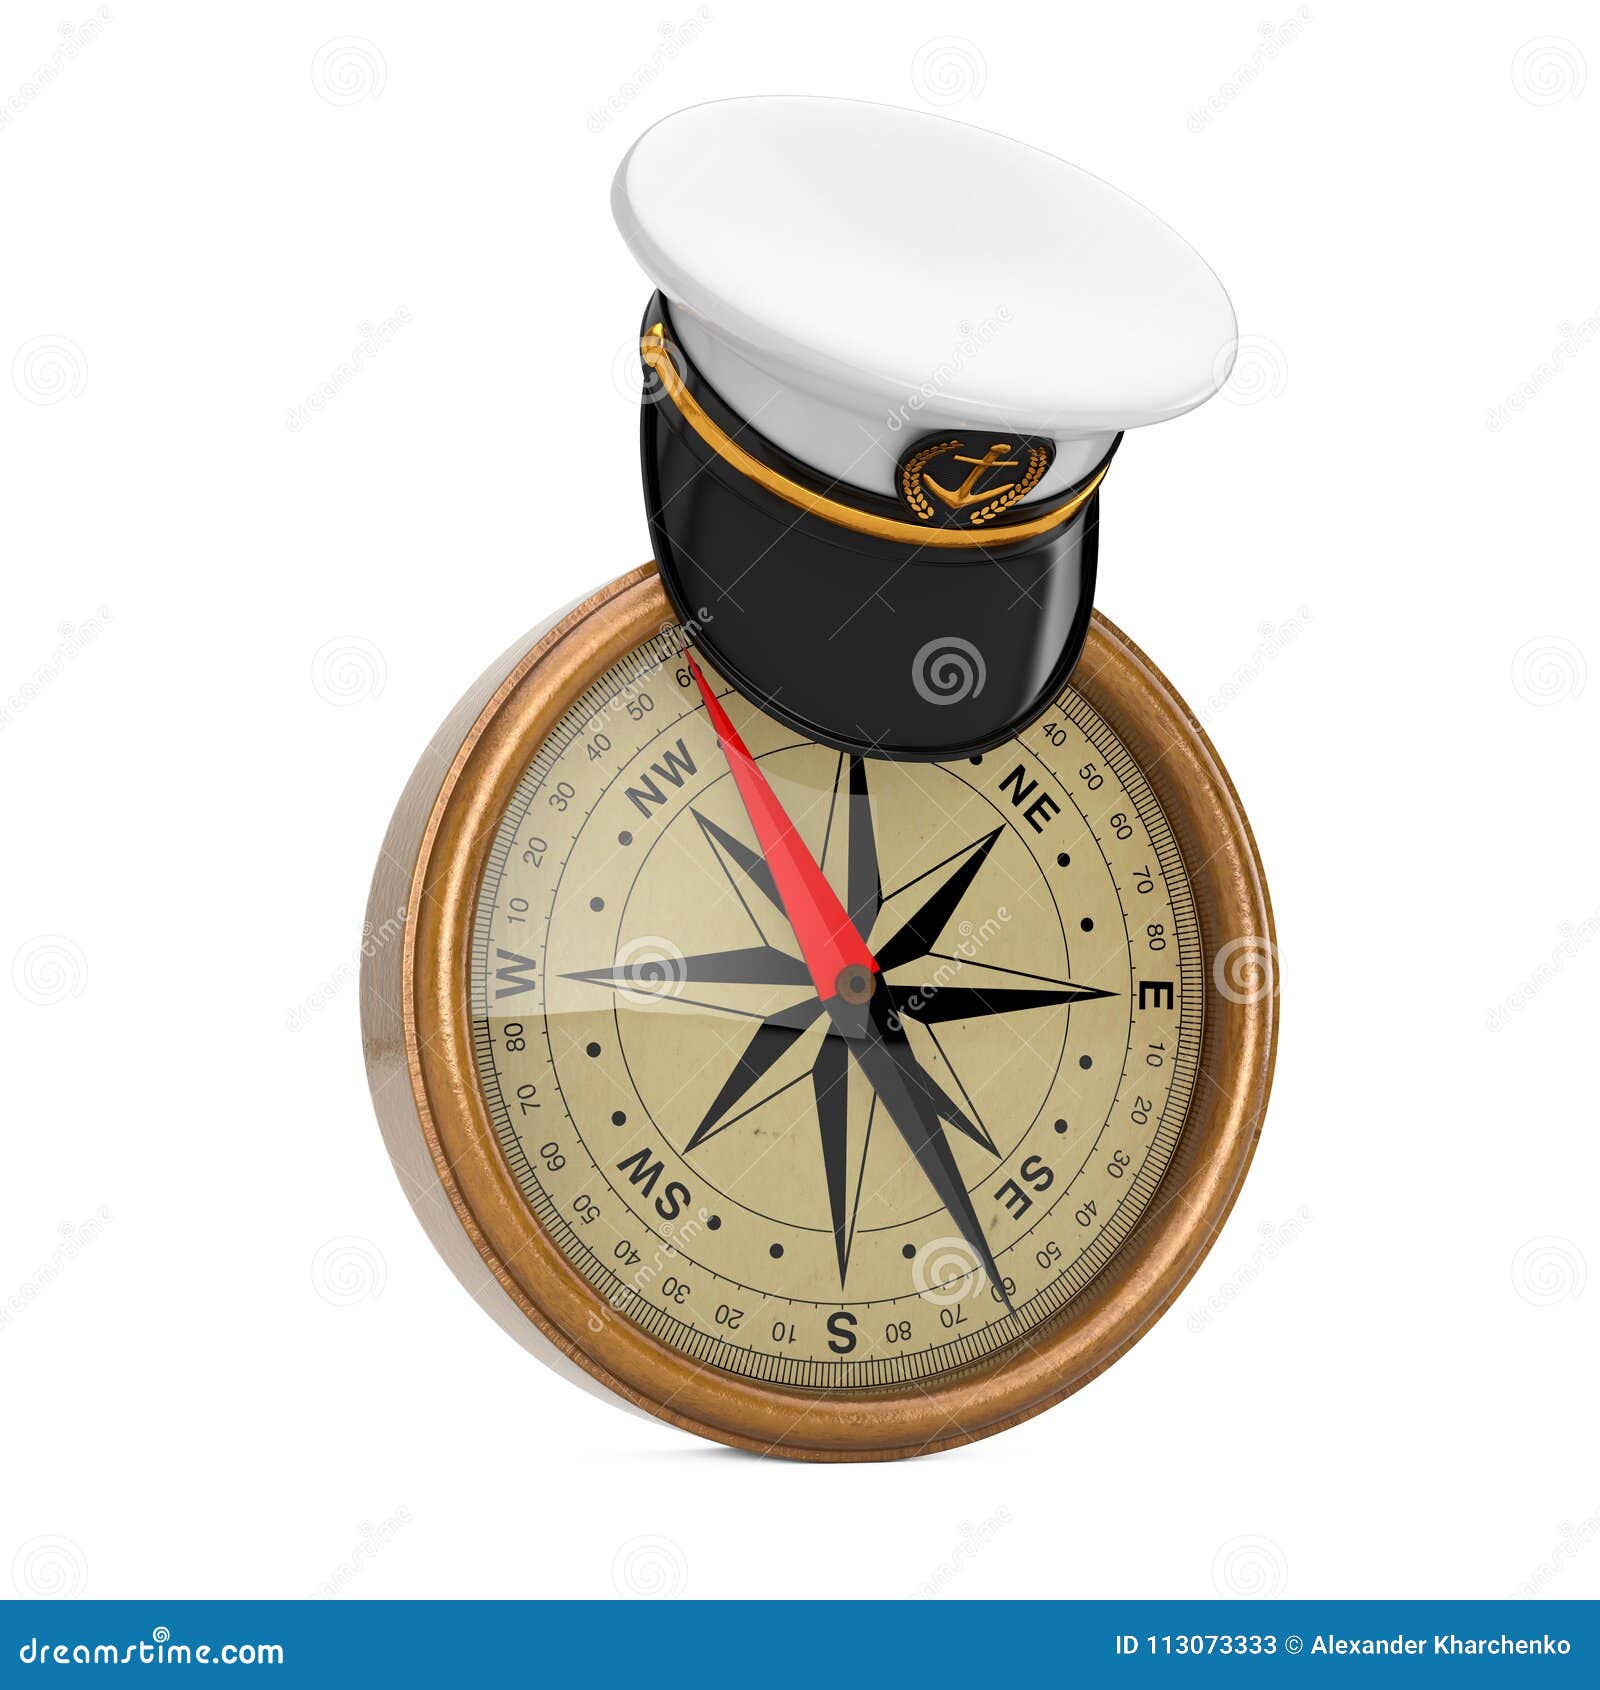 naval officer, admiral, navy ship captain hat over antique vintage brass compass. 3d rendering